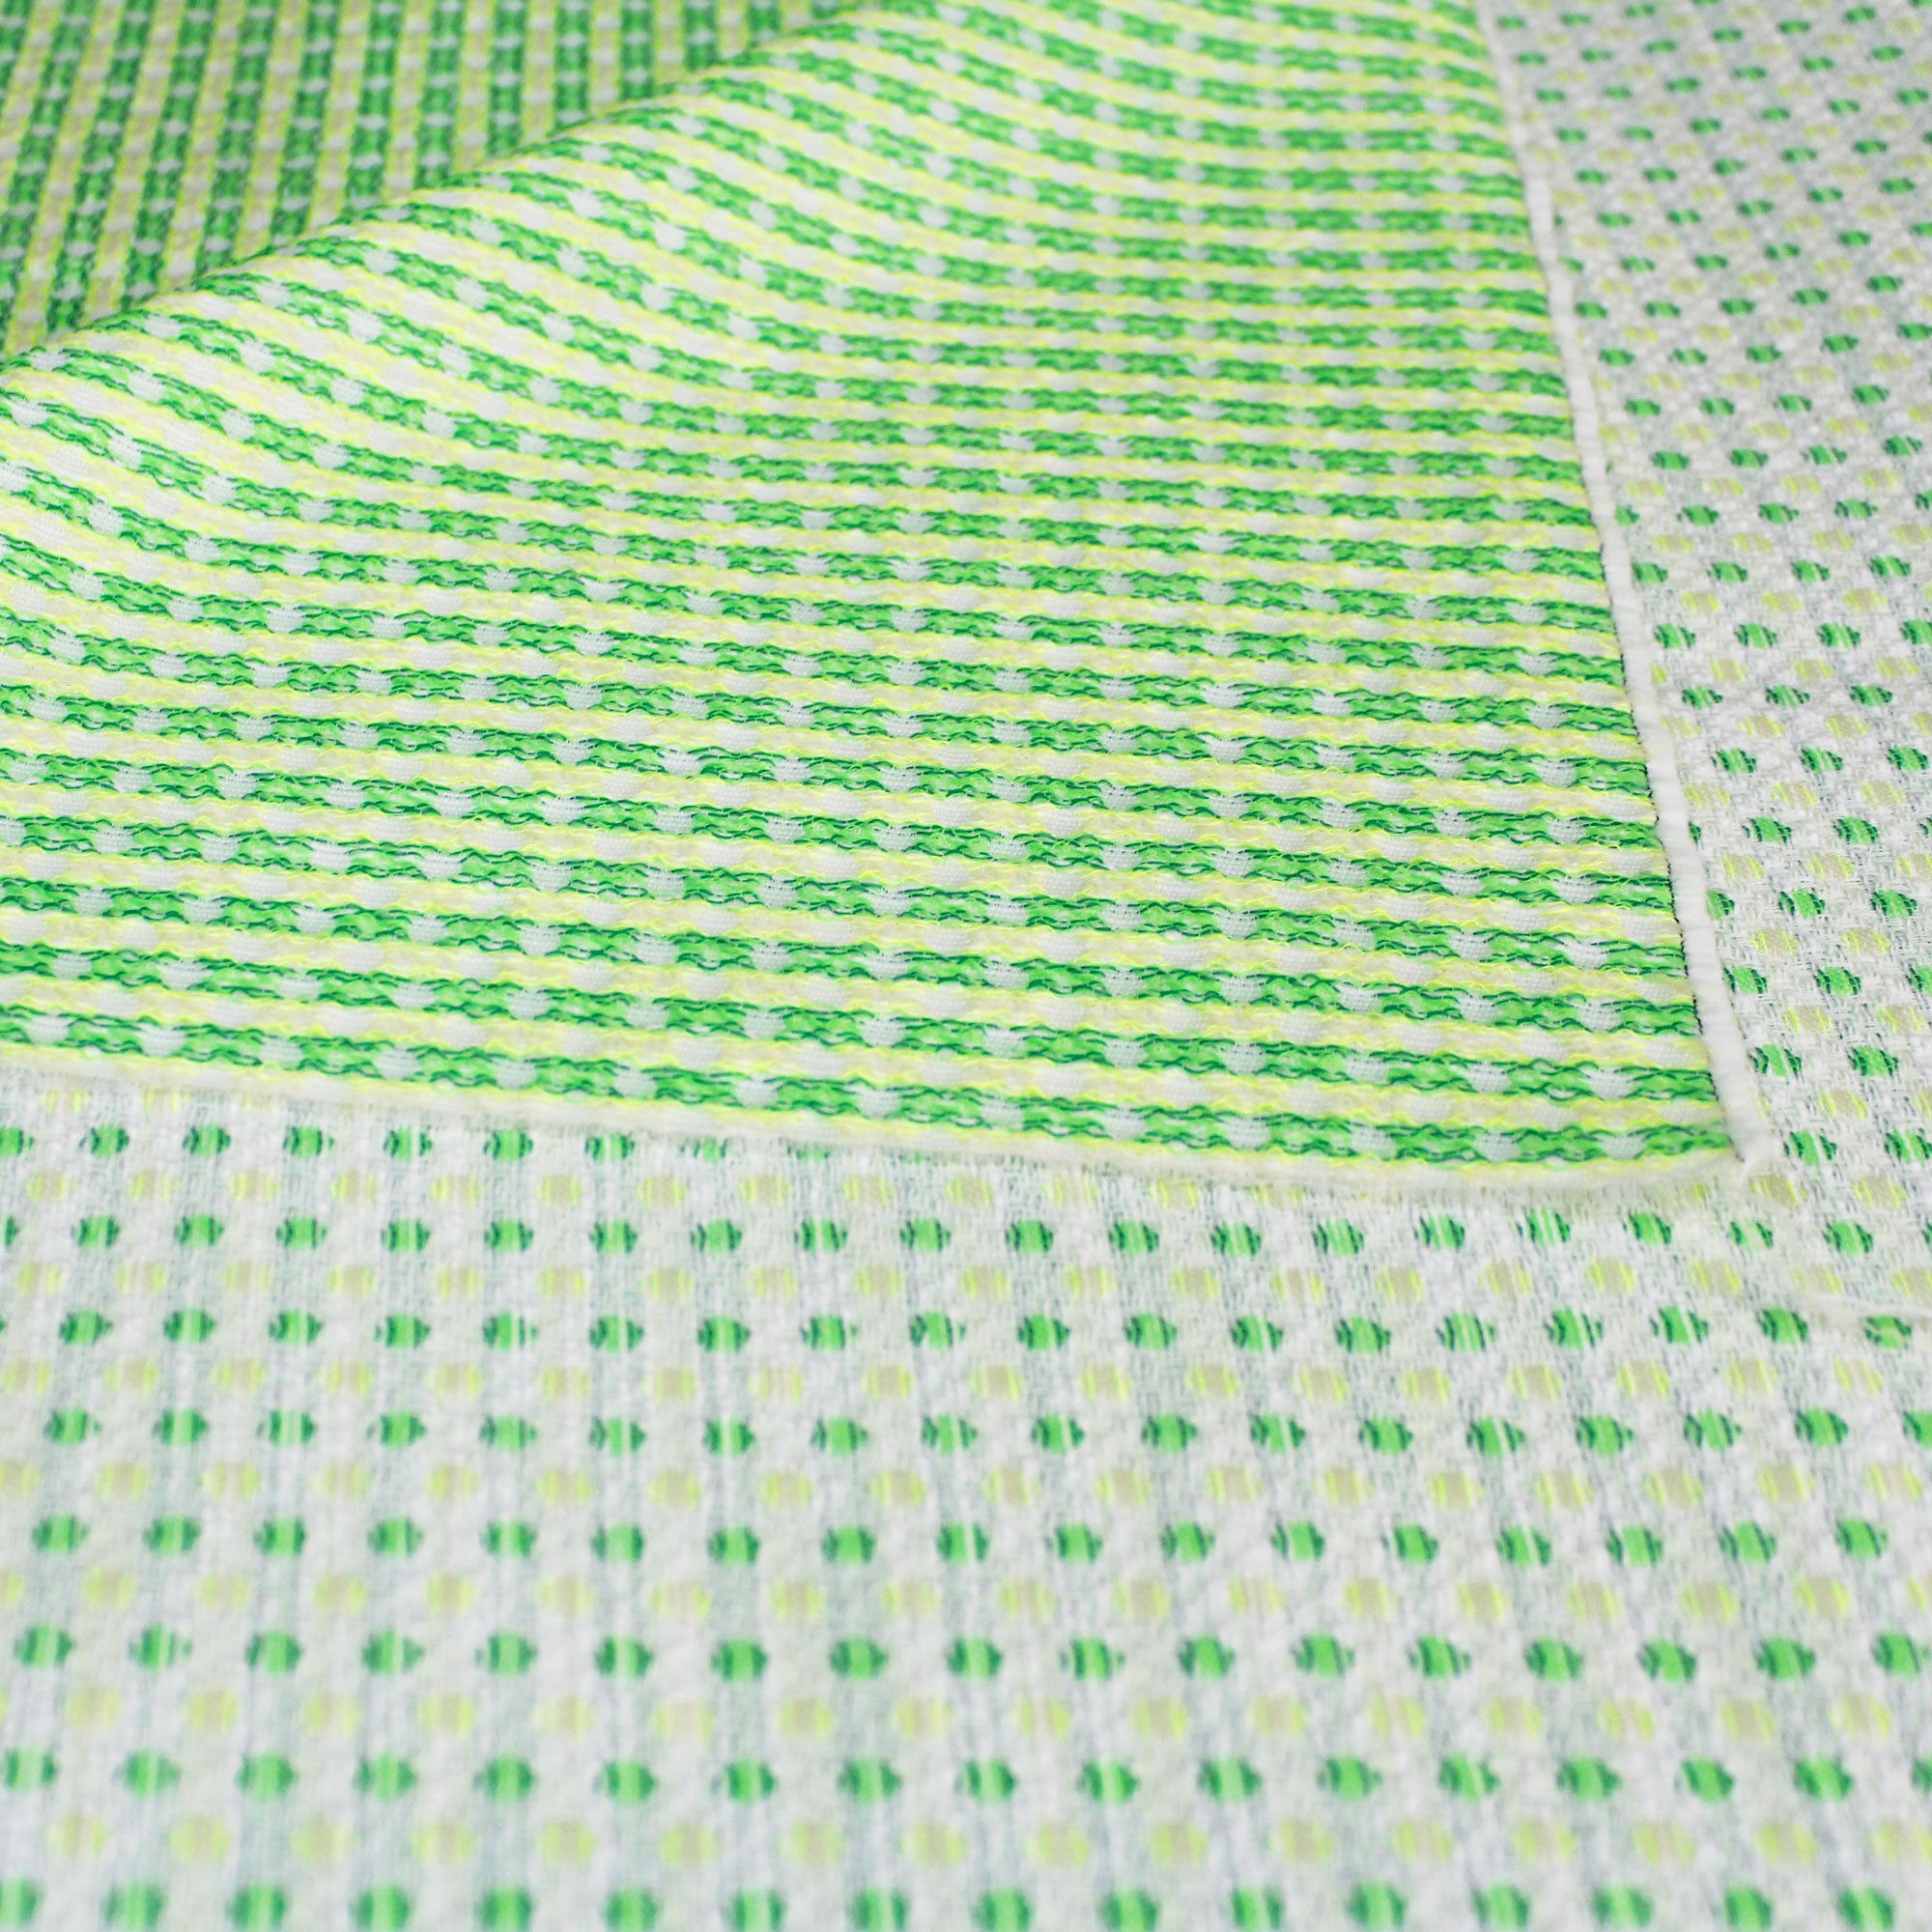 Green and yellow polka dot cotton jacquard fabric